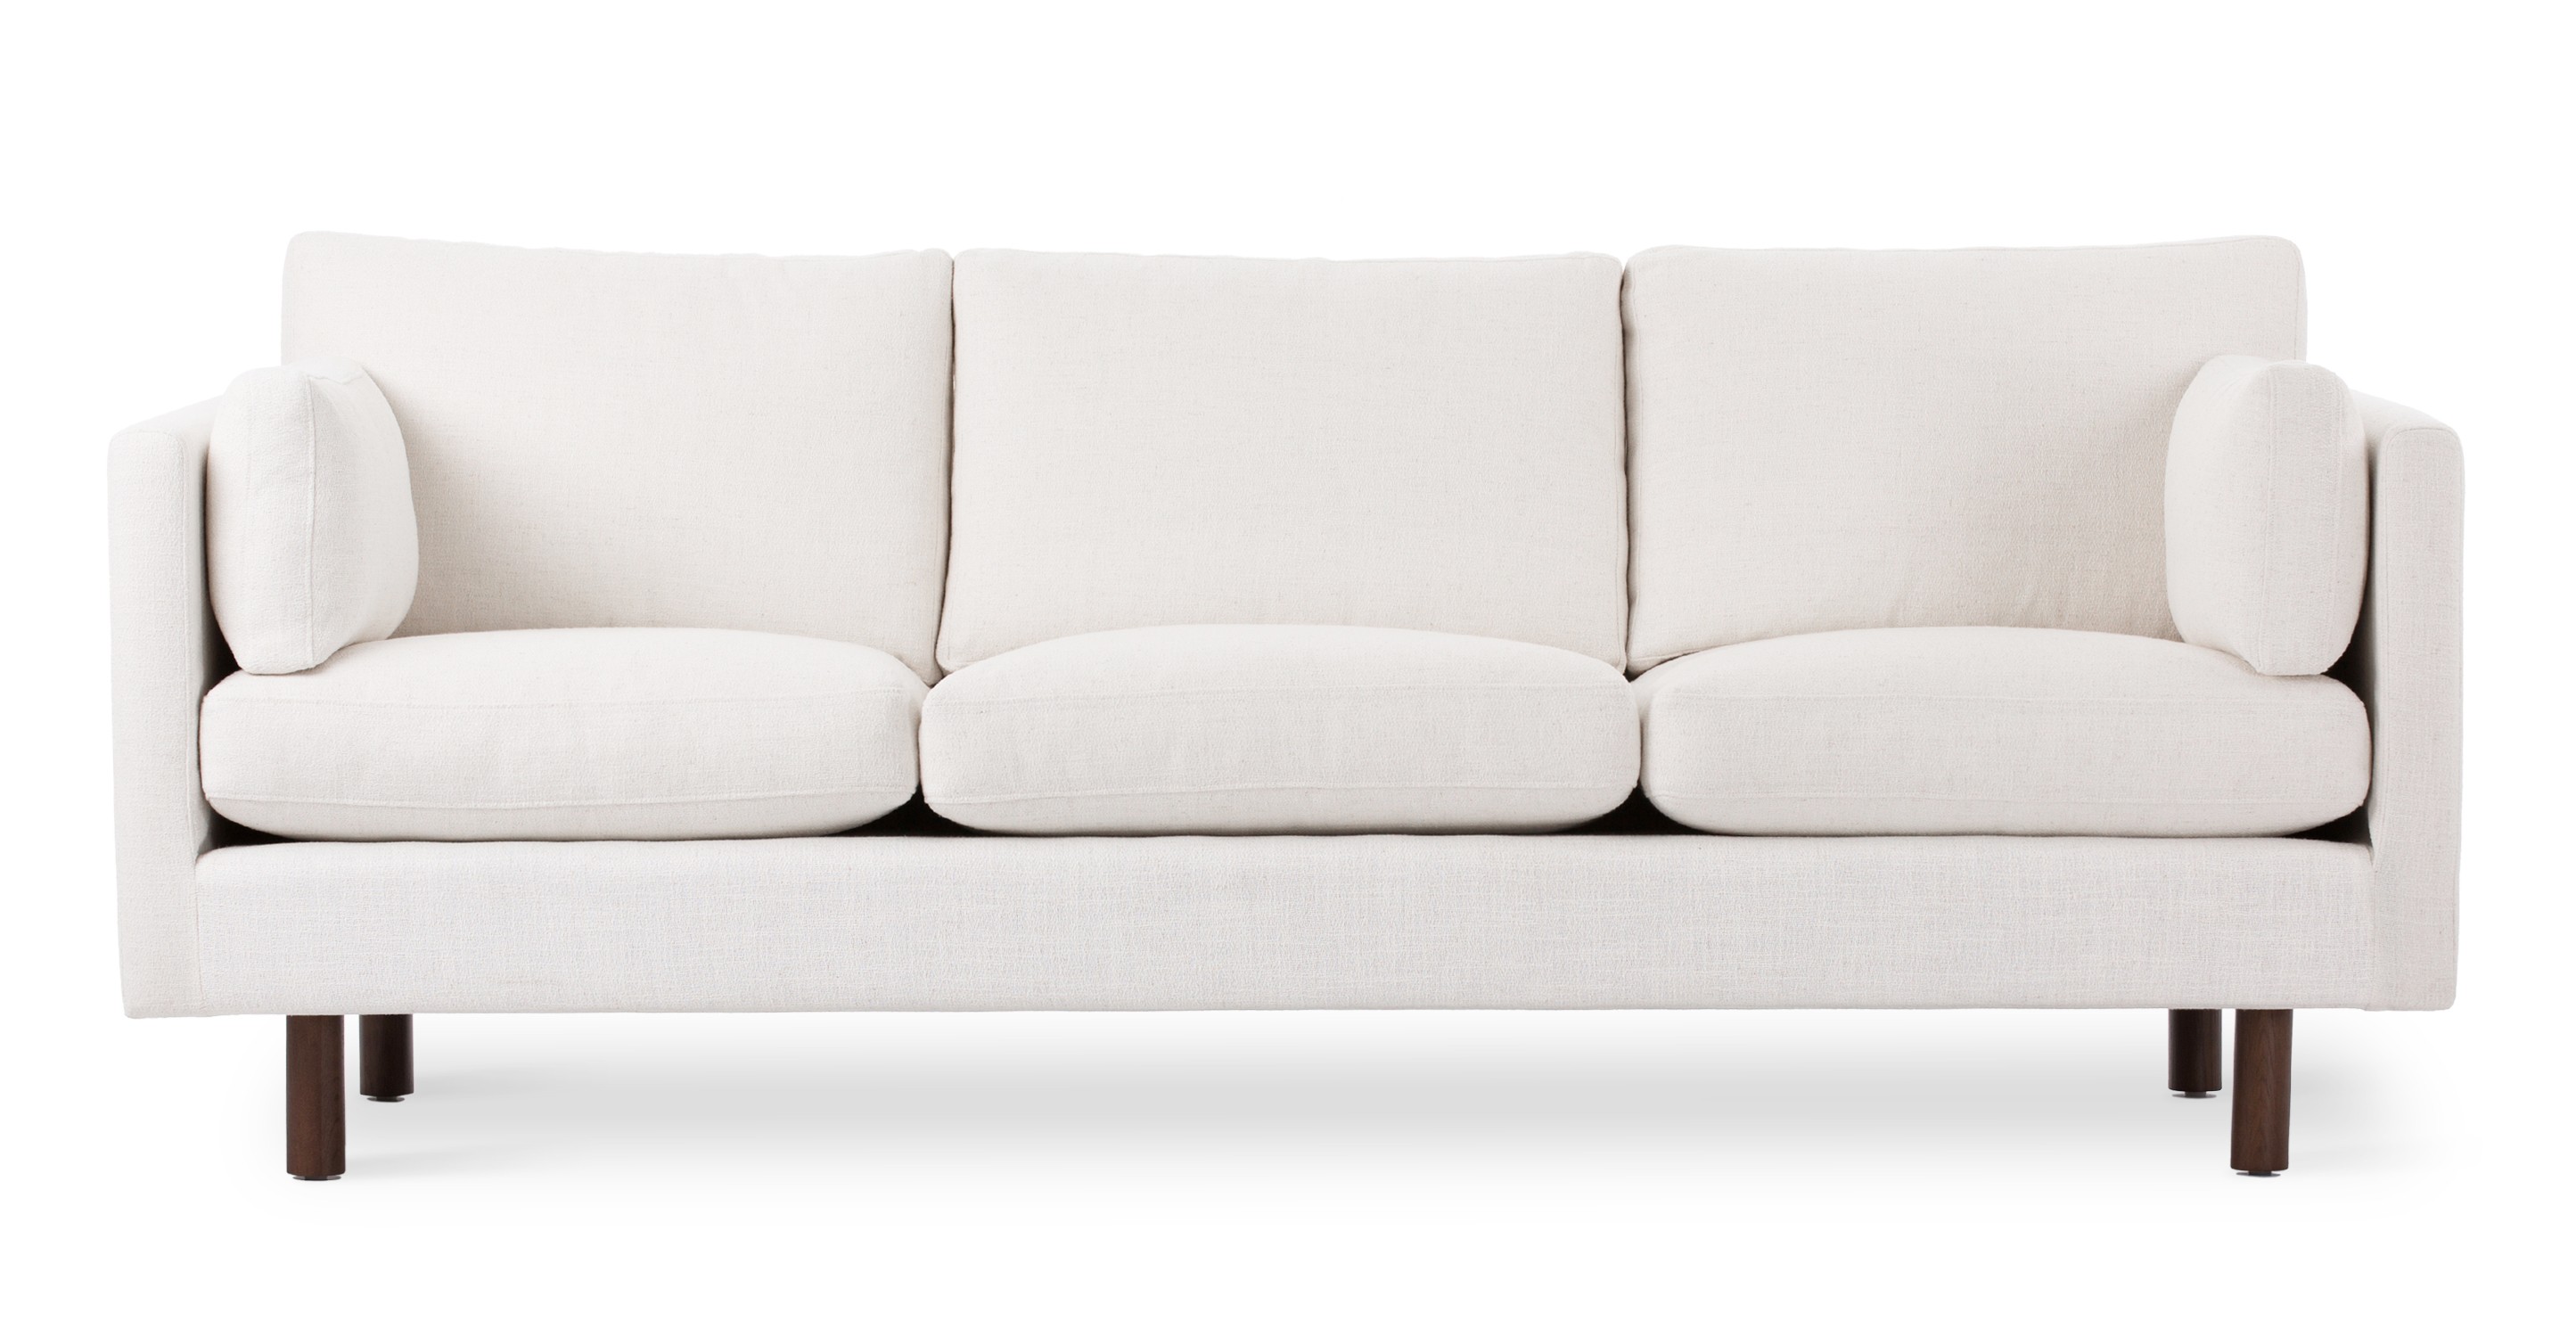 stylish white sofa sofa modern white decorating ideas leather sectional bed  sleeper HZLDOQD